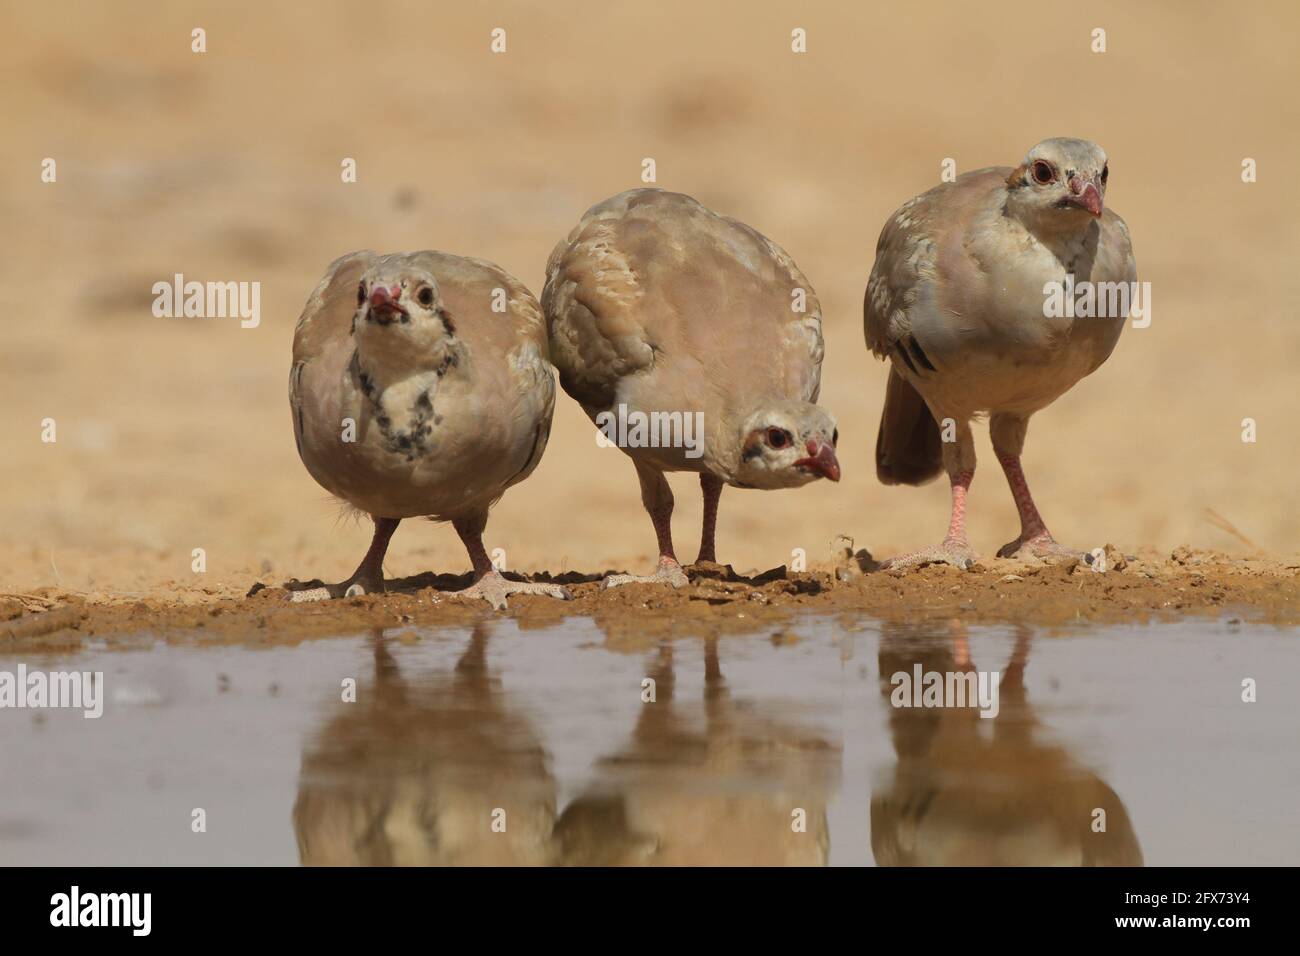 Chukar Partridge or Chukar (Alectoris chukar) Photographed in Israel, Near a water pool Negev desert. A Palearctic upland gamebird in the pheasant fam Stock Photo